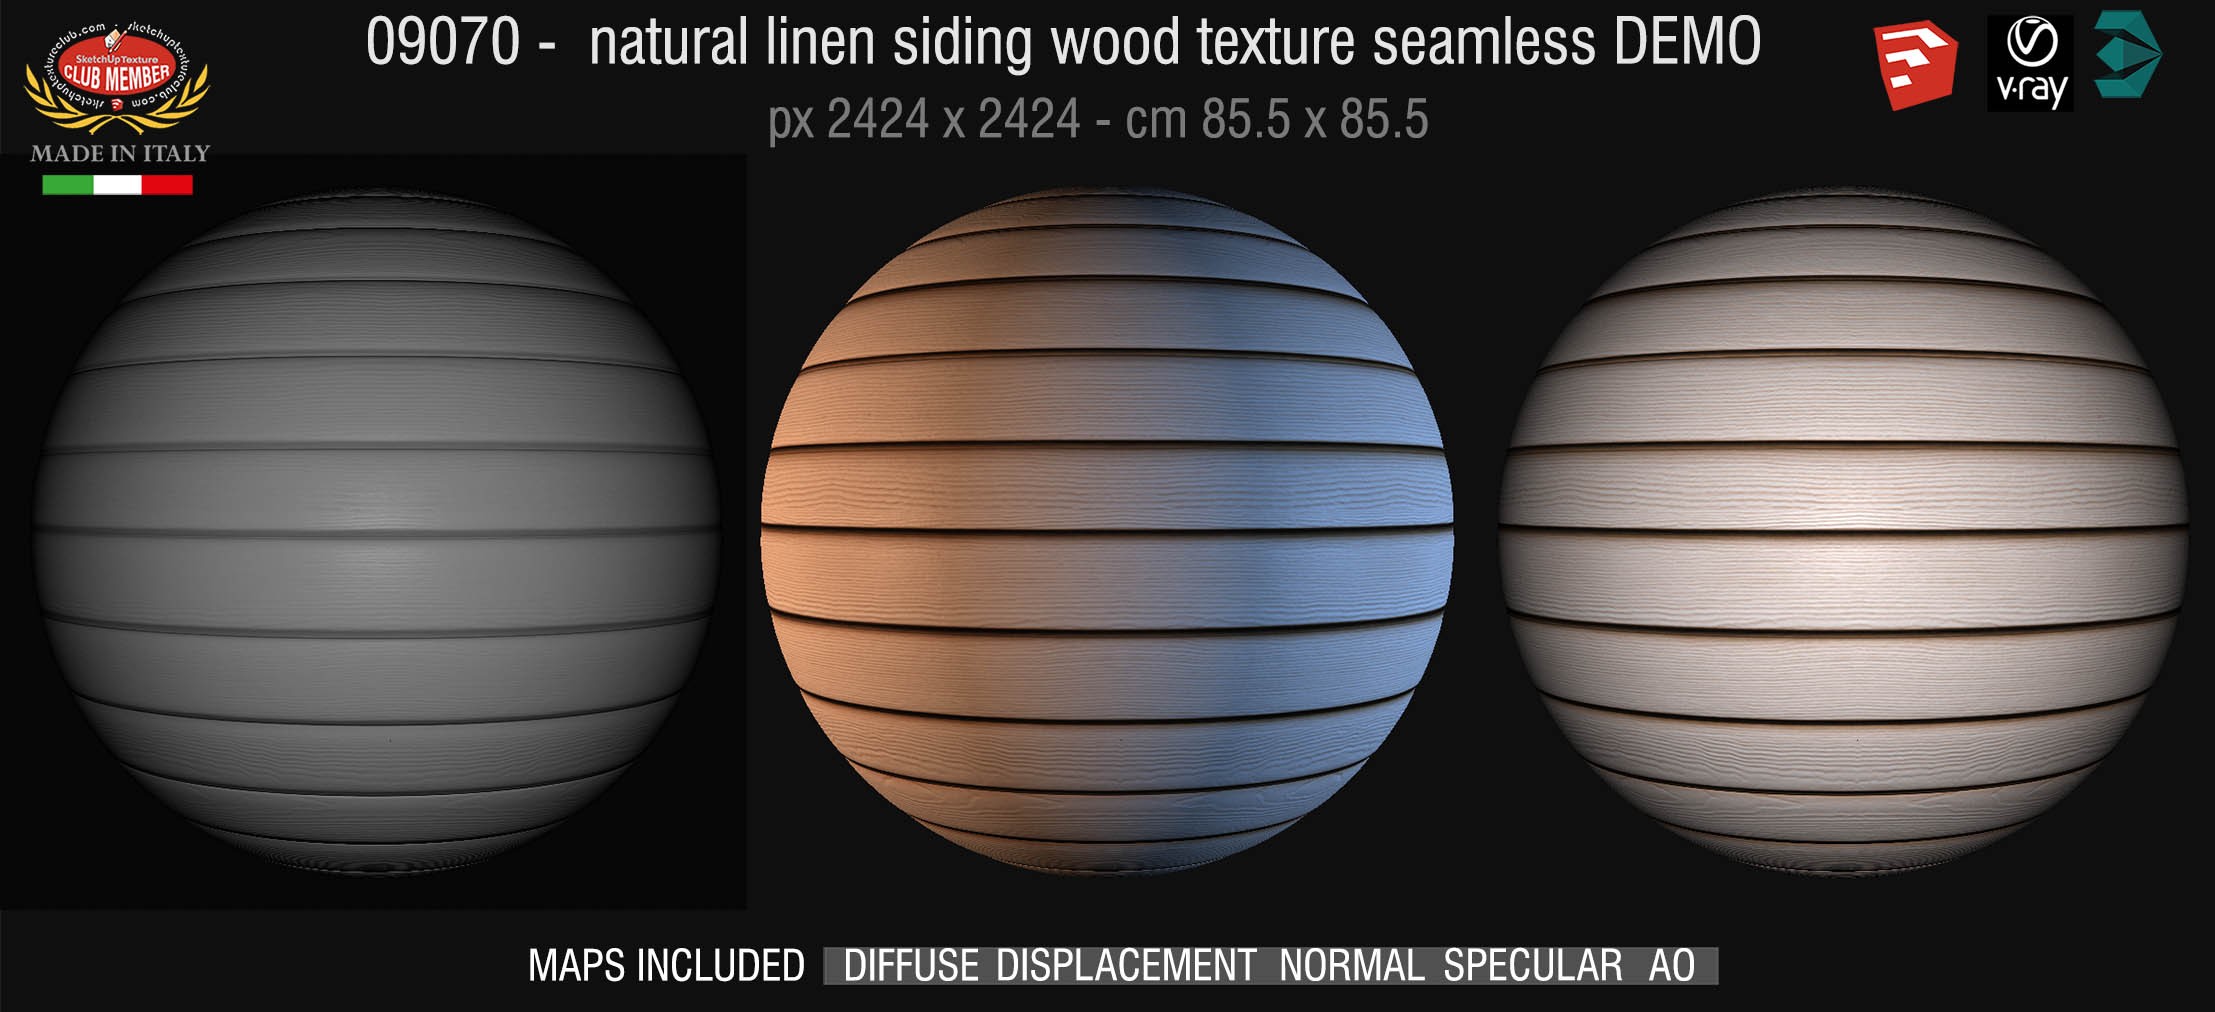 09070 HR Natural linen siding wood texture + maps DEMO